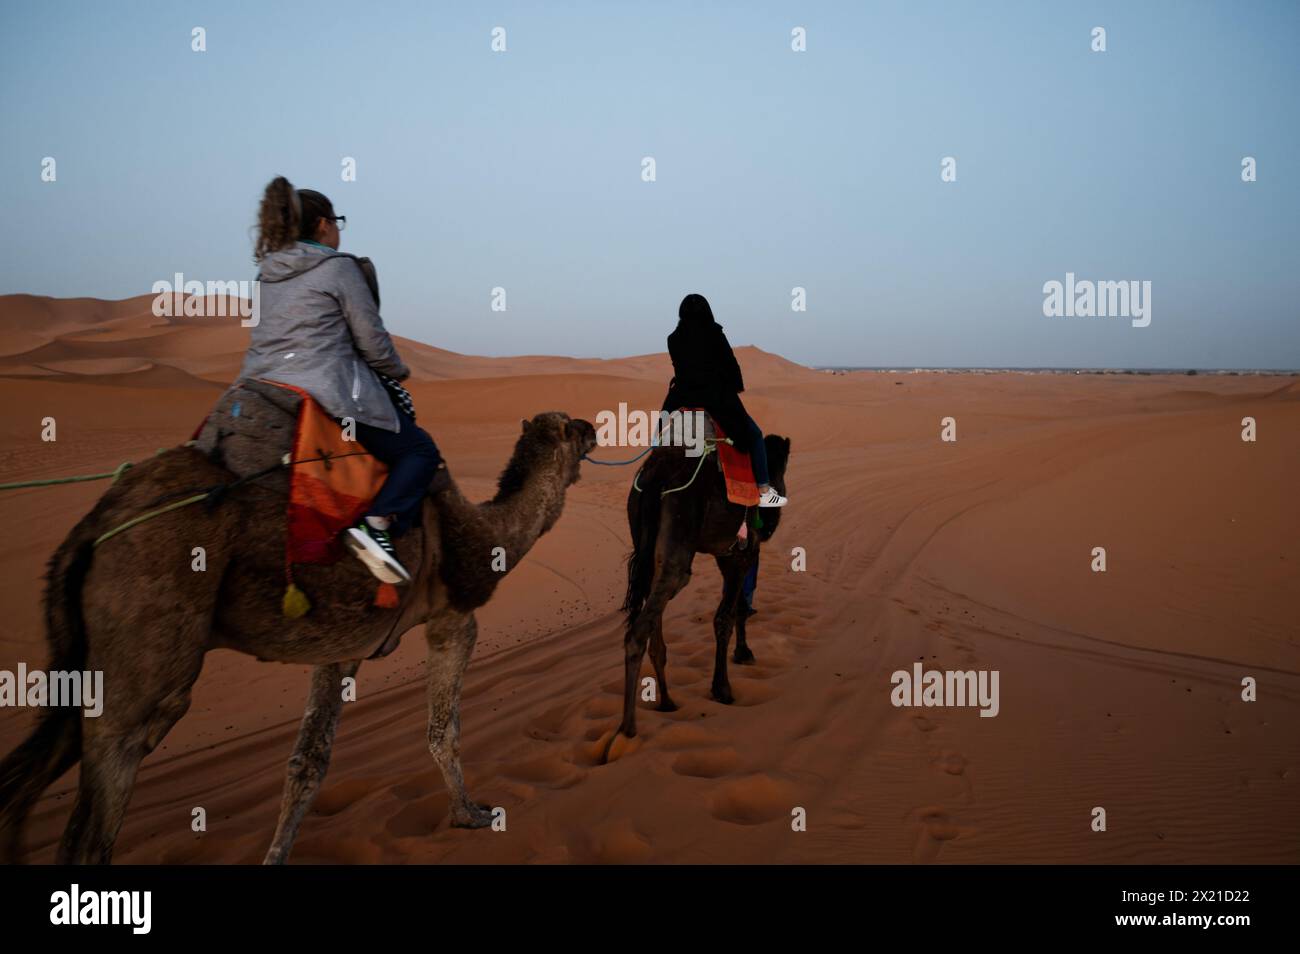 Camel ride in merzouga desert, two women navigating the sand in soft light. Stock Photo